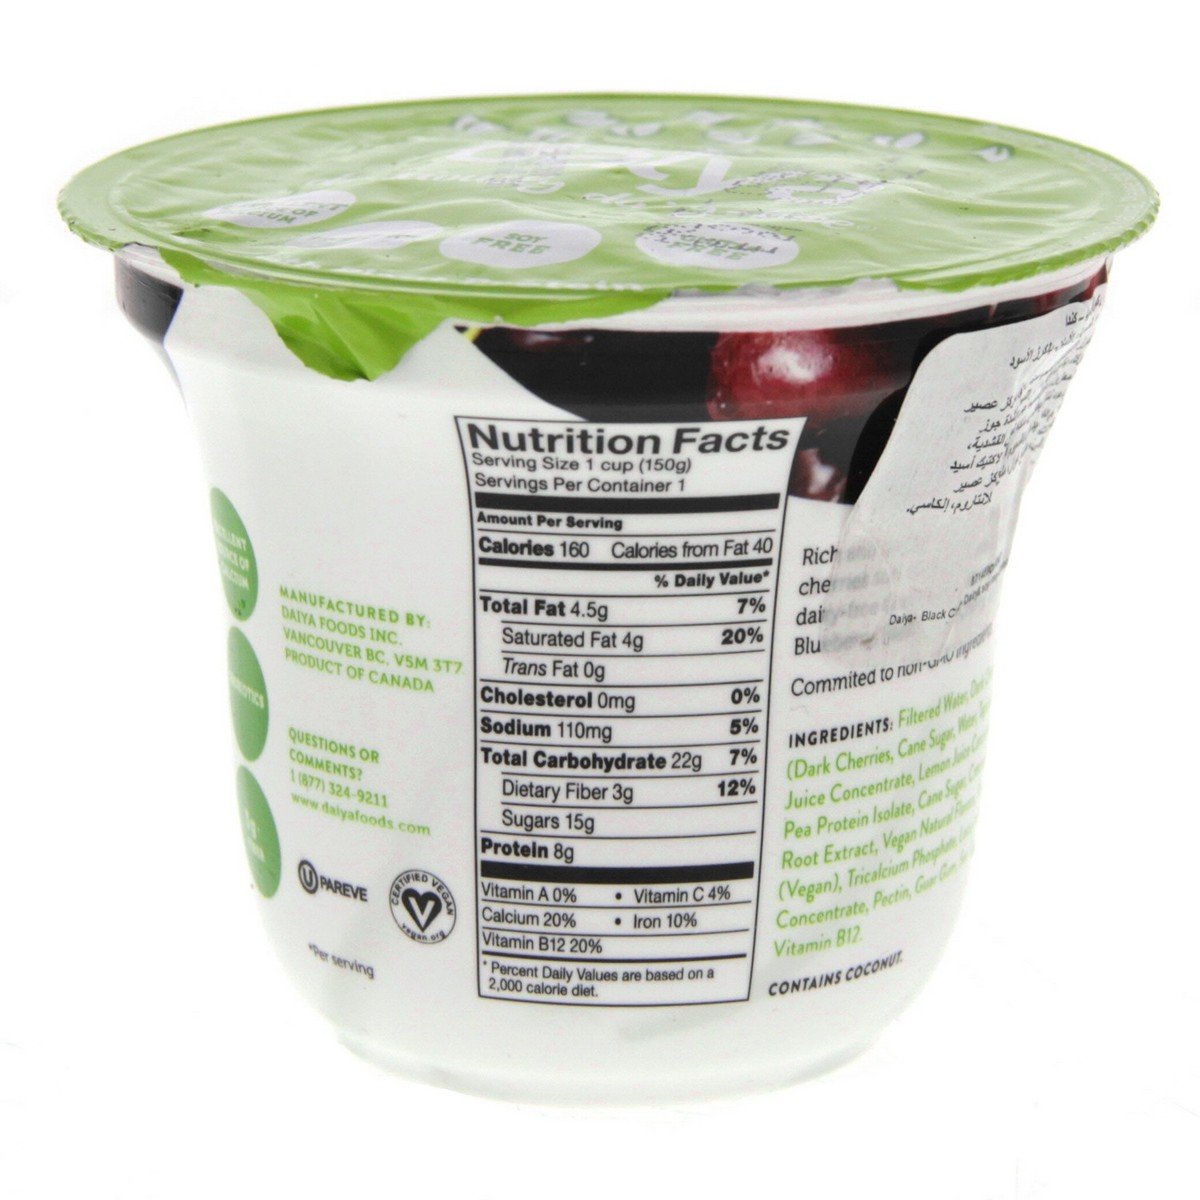 Daiya Black Cherry Greek Yogurt 150 g